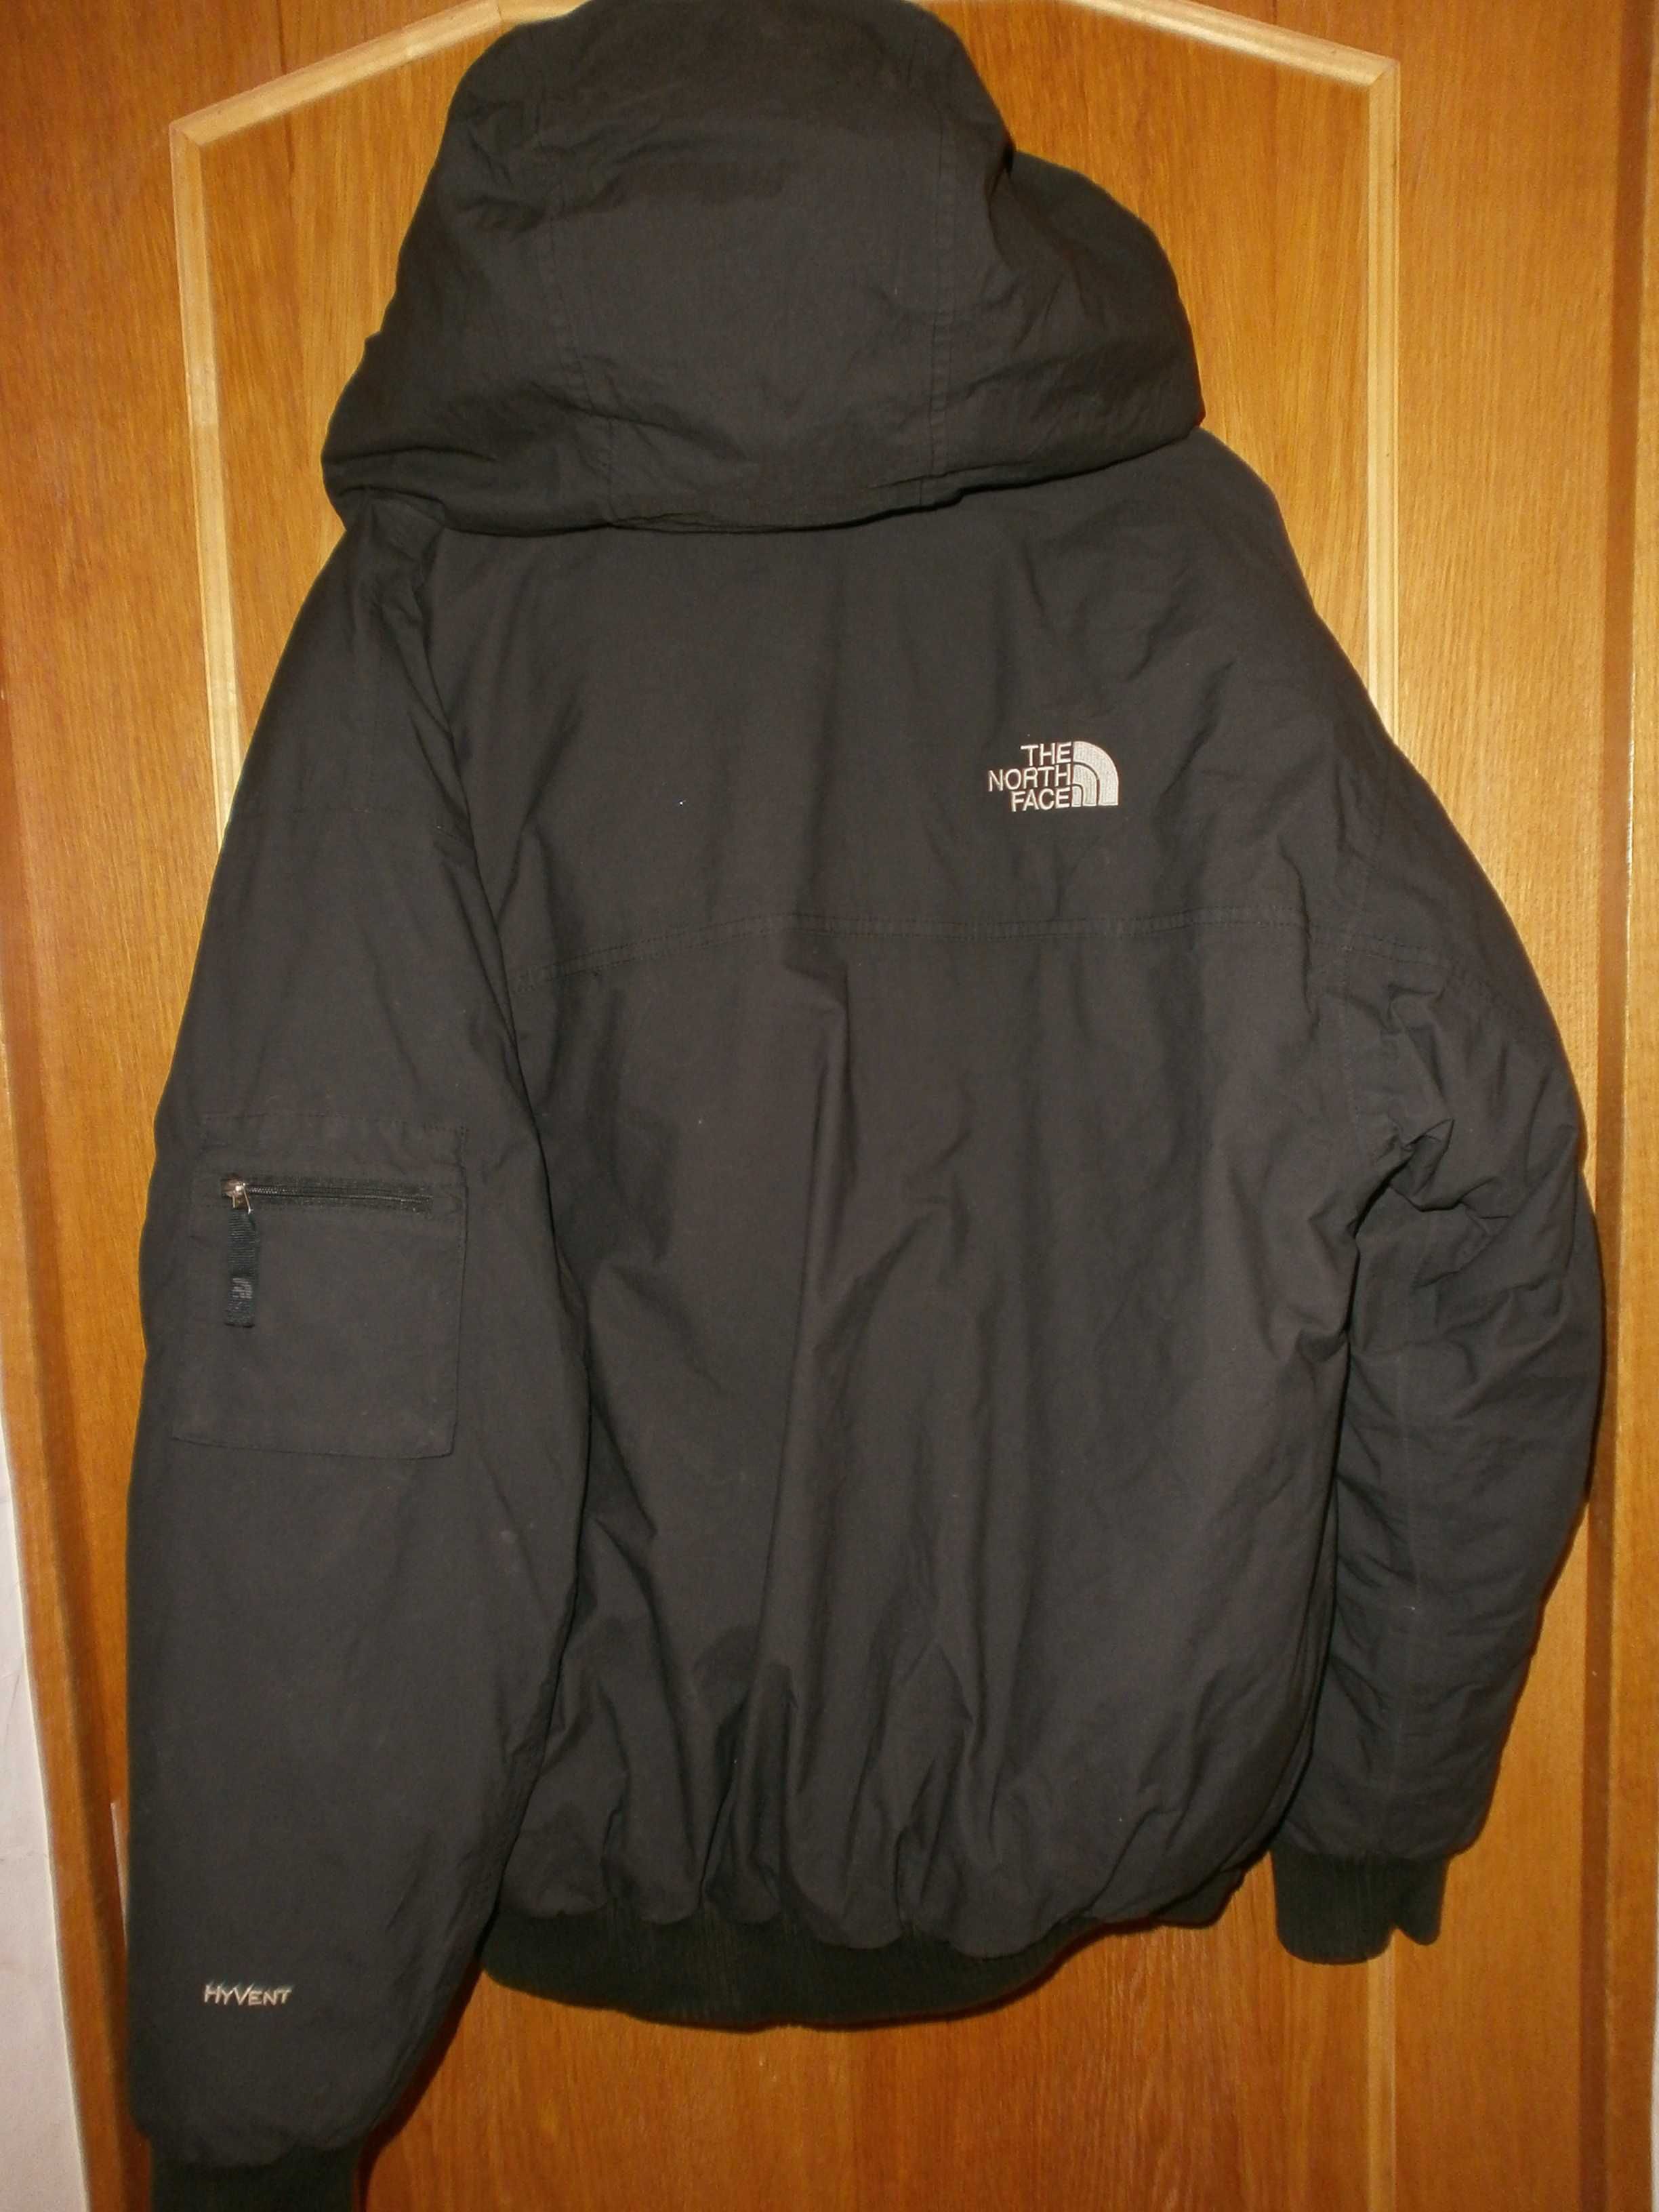 Куртка The North Face, разм. L,наш 52-54. ПОГ-62 см. Съёмная подстёжка